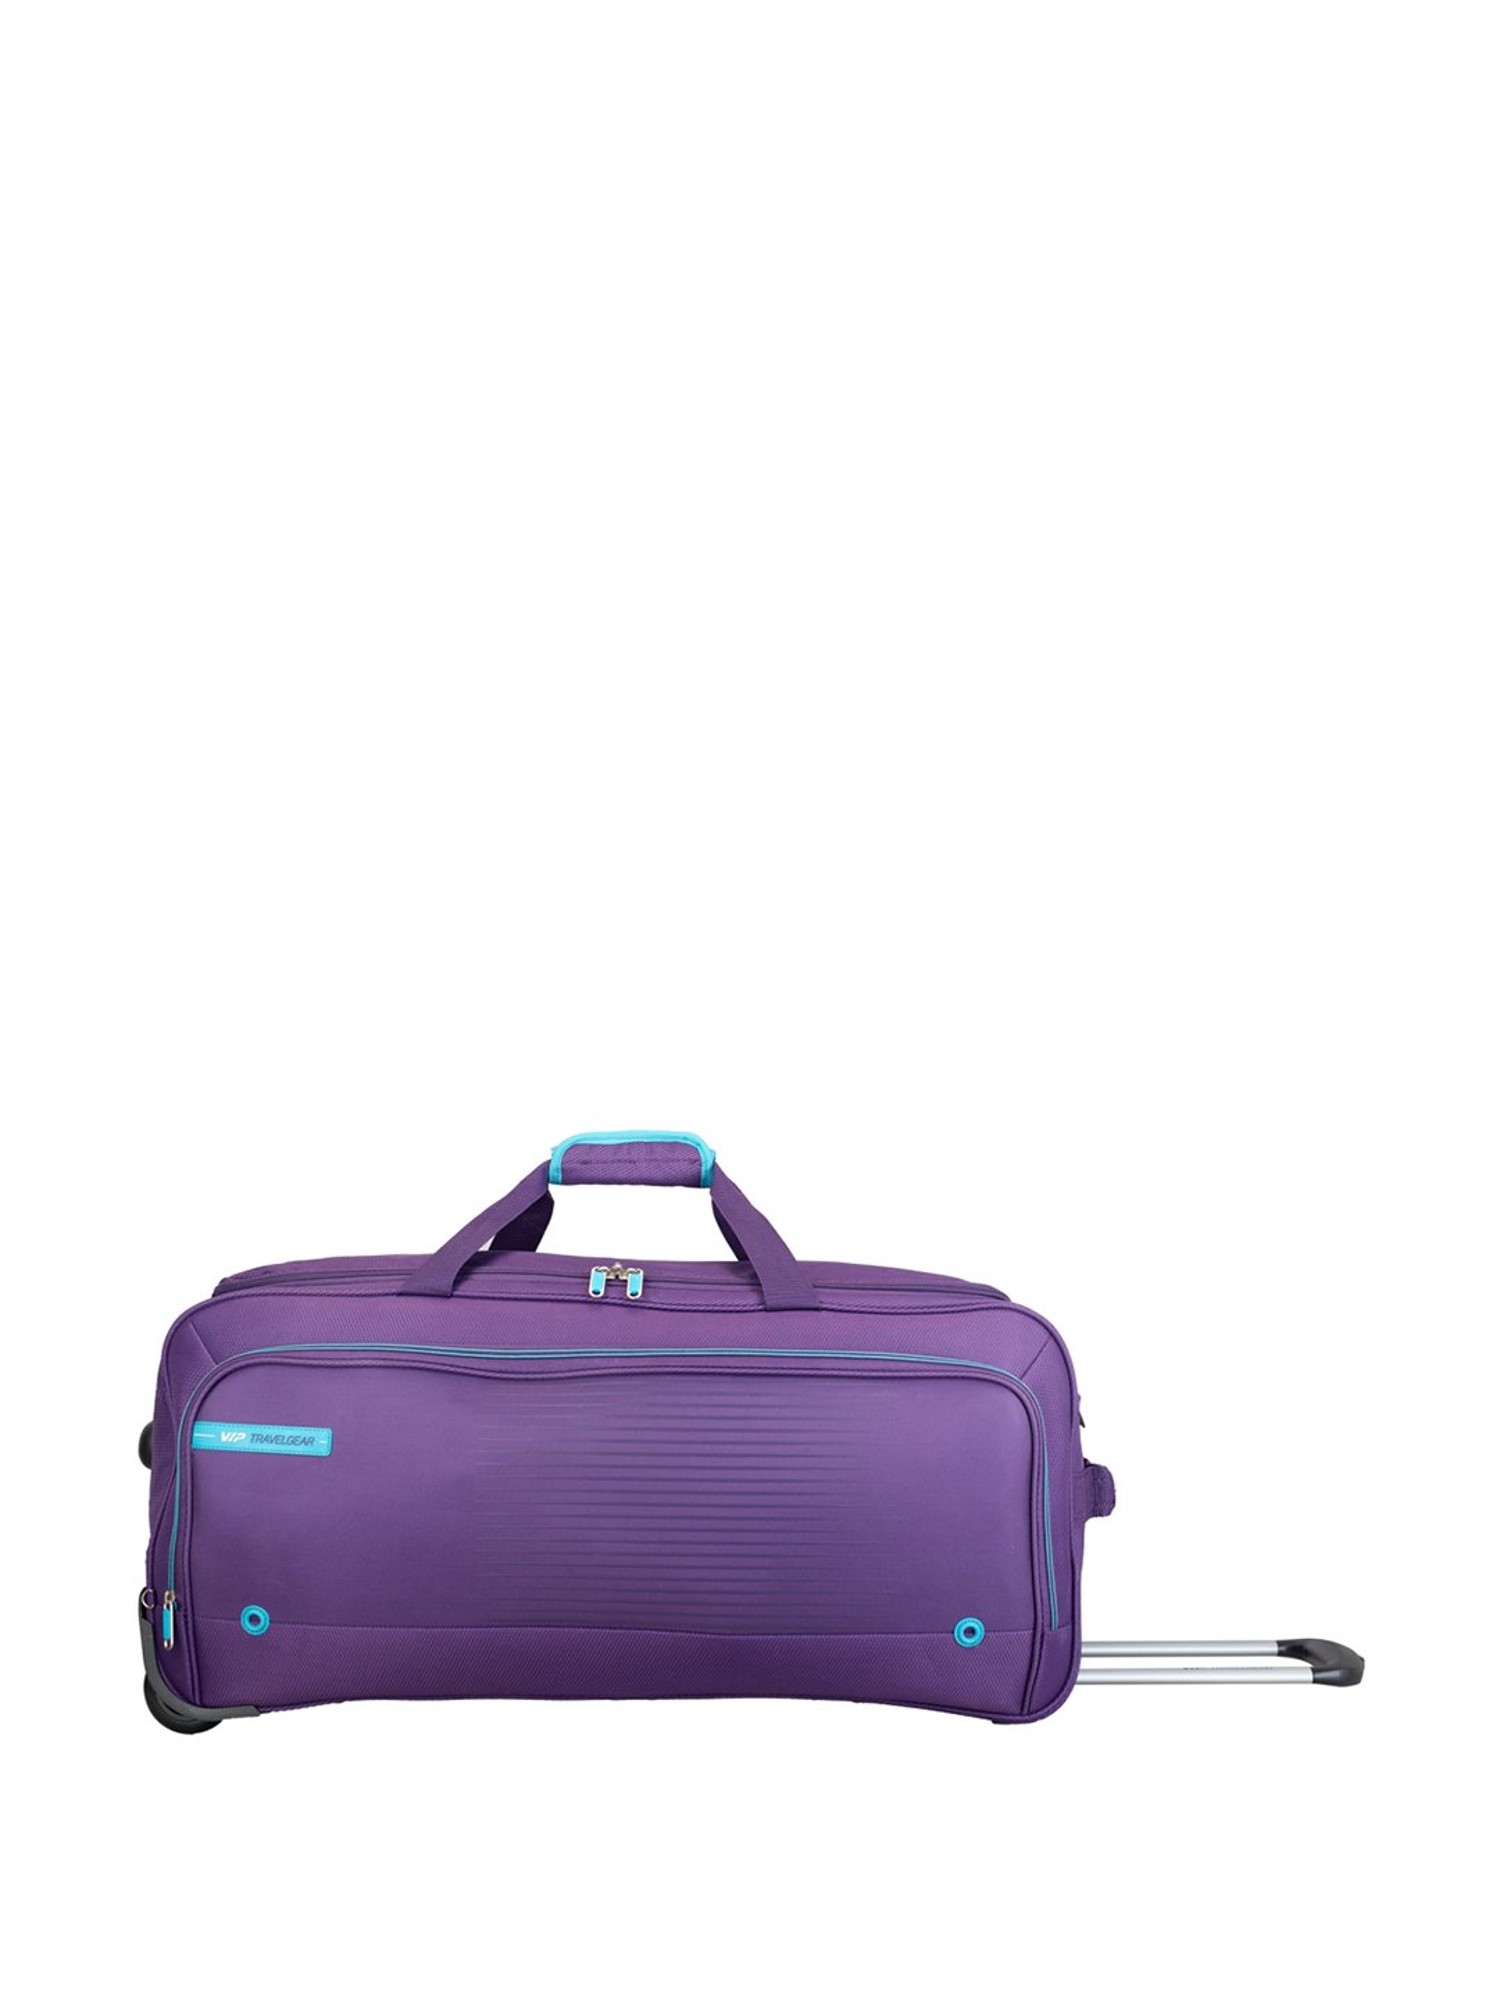 Vip Luggage Bags Trolley - Buy Vip Luggage Bags Trolley online in India